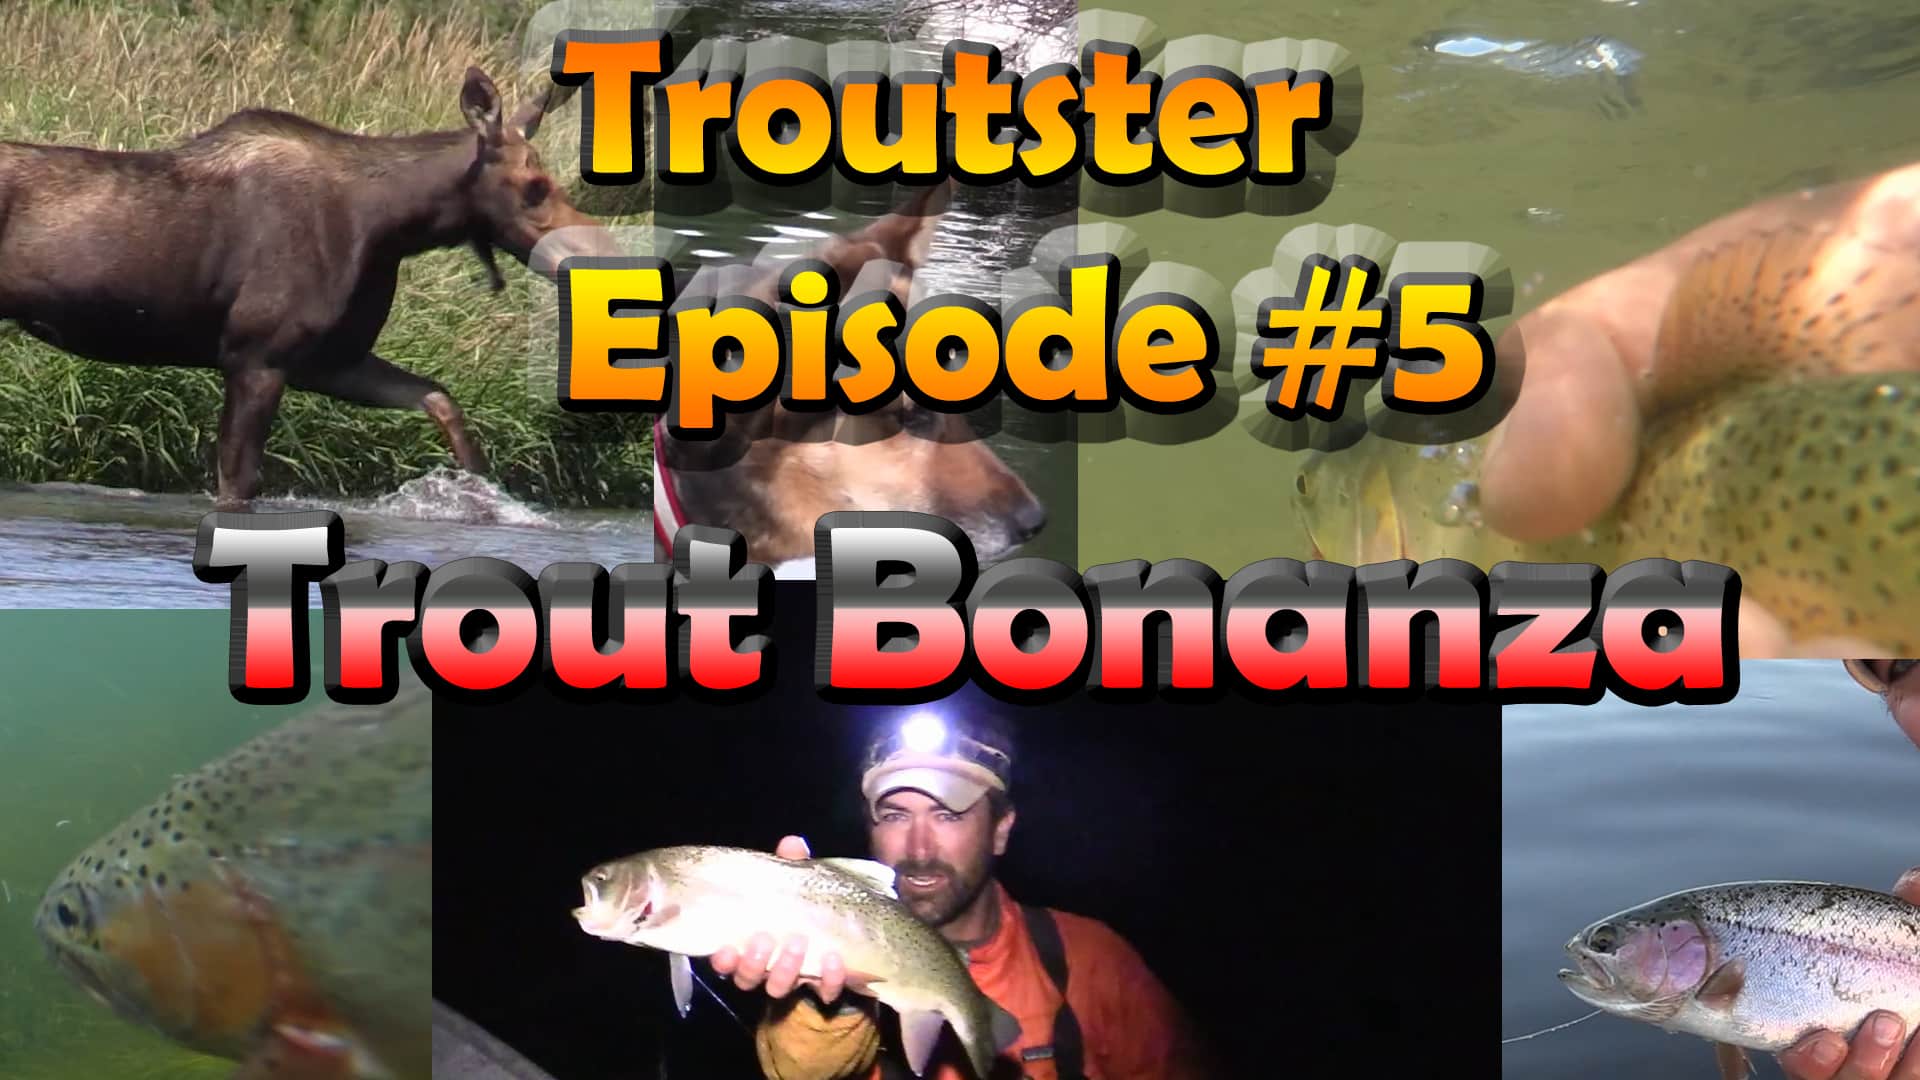 Trout fishing bonanza troutster episode 5